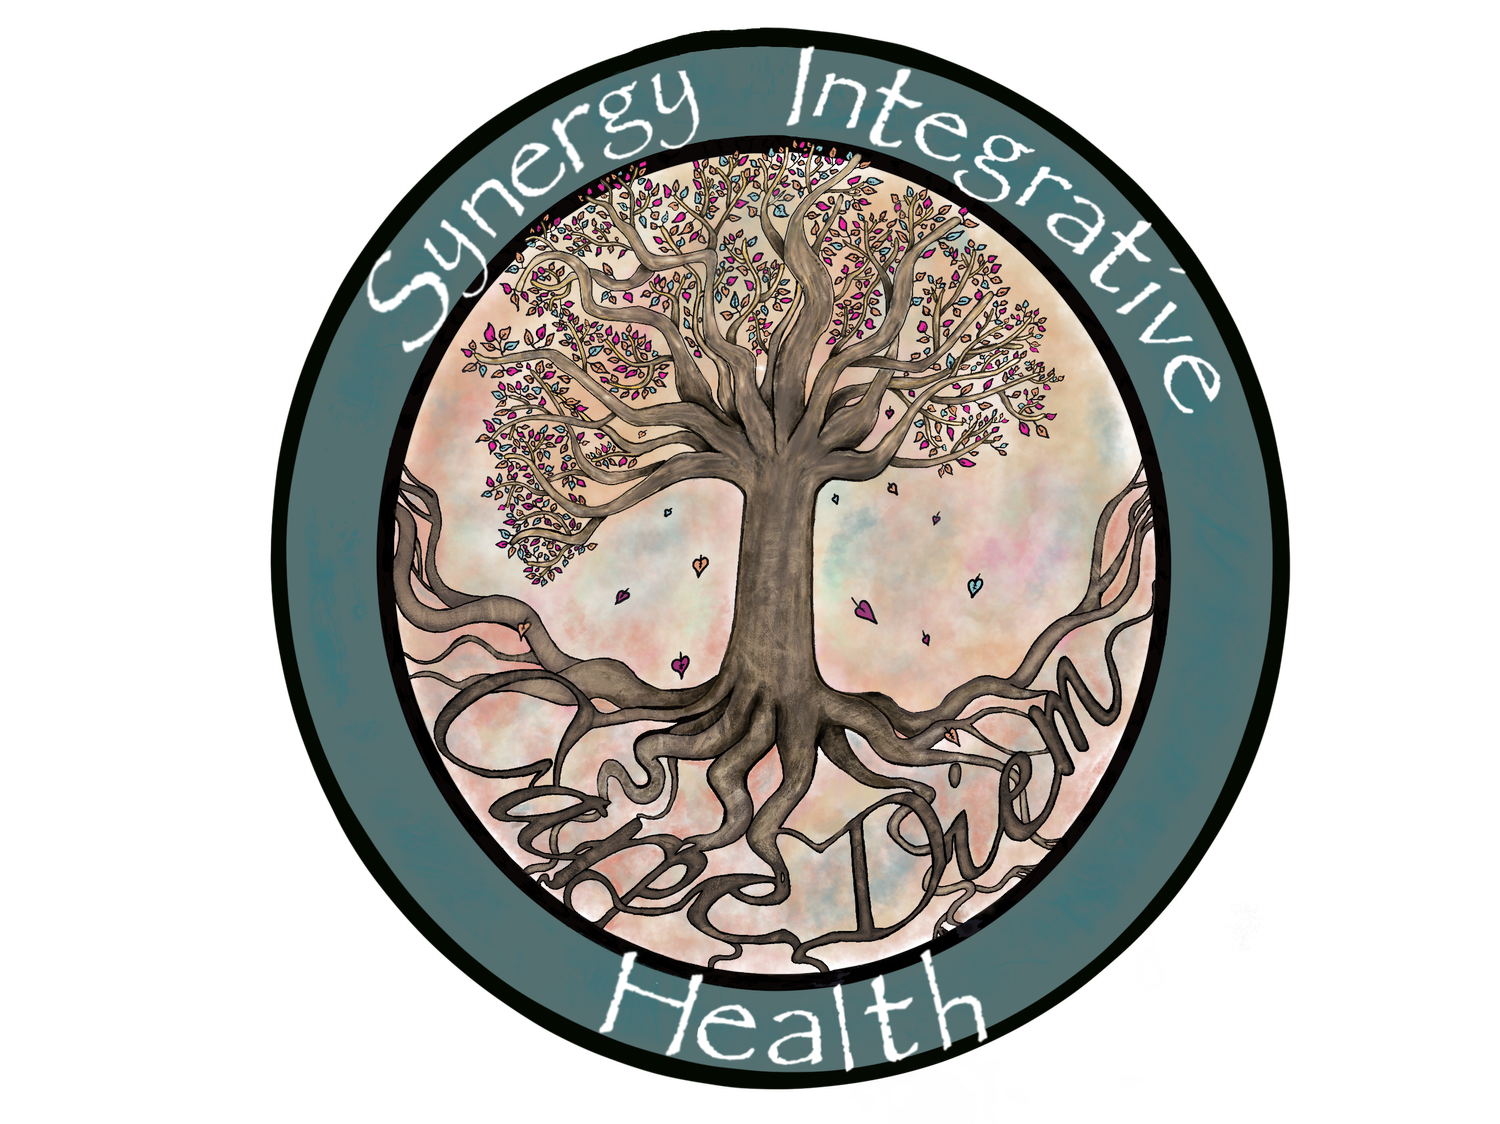 Synergy Integrative Health